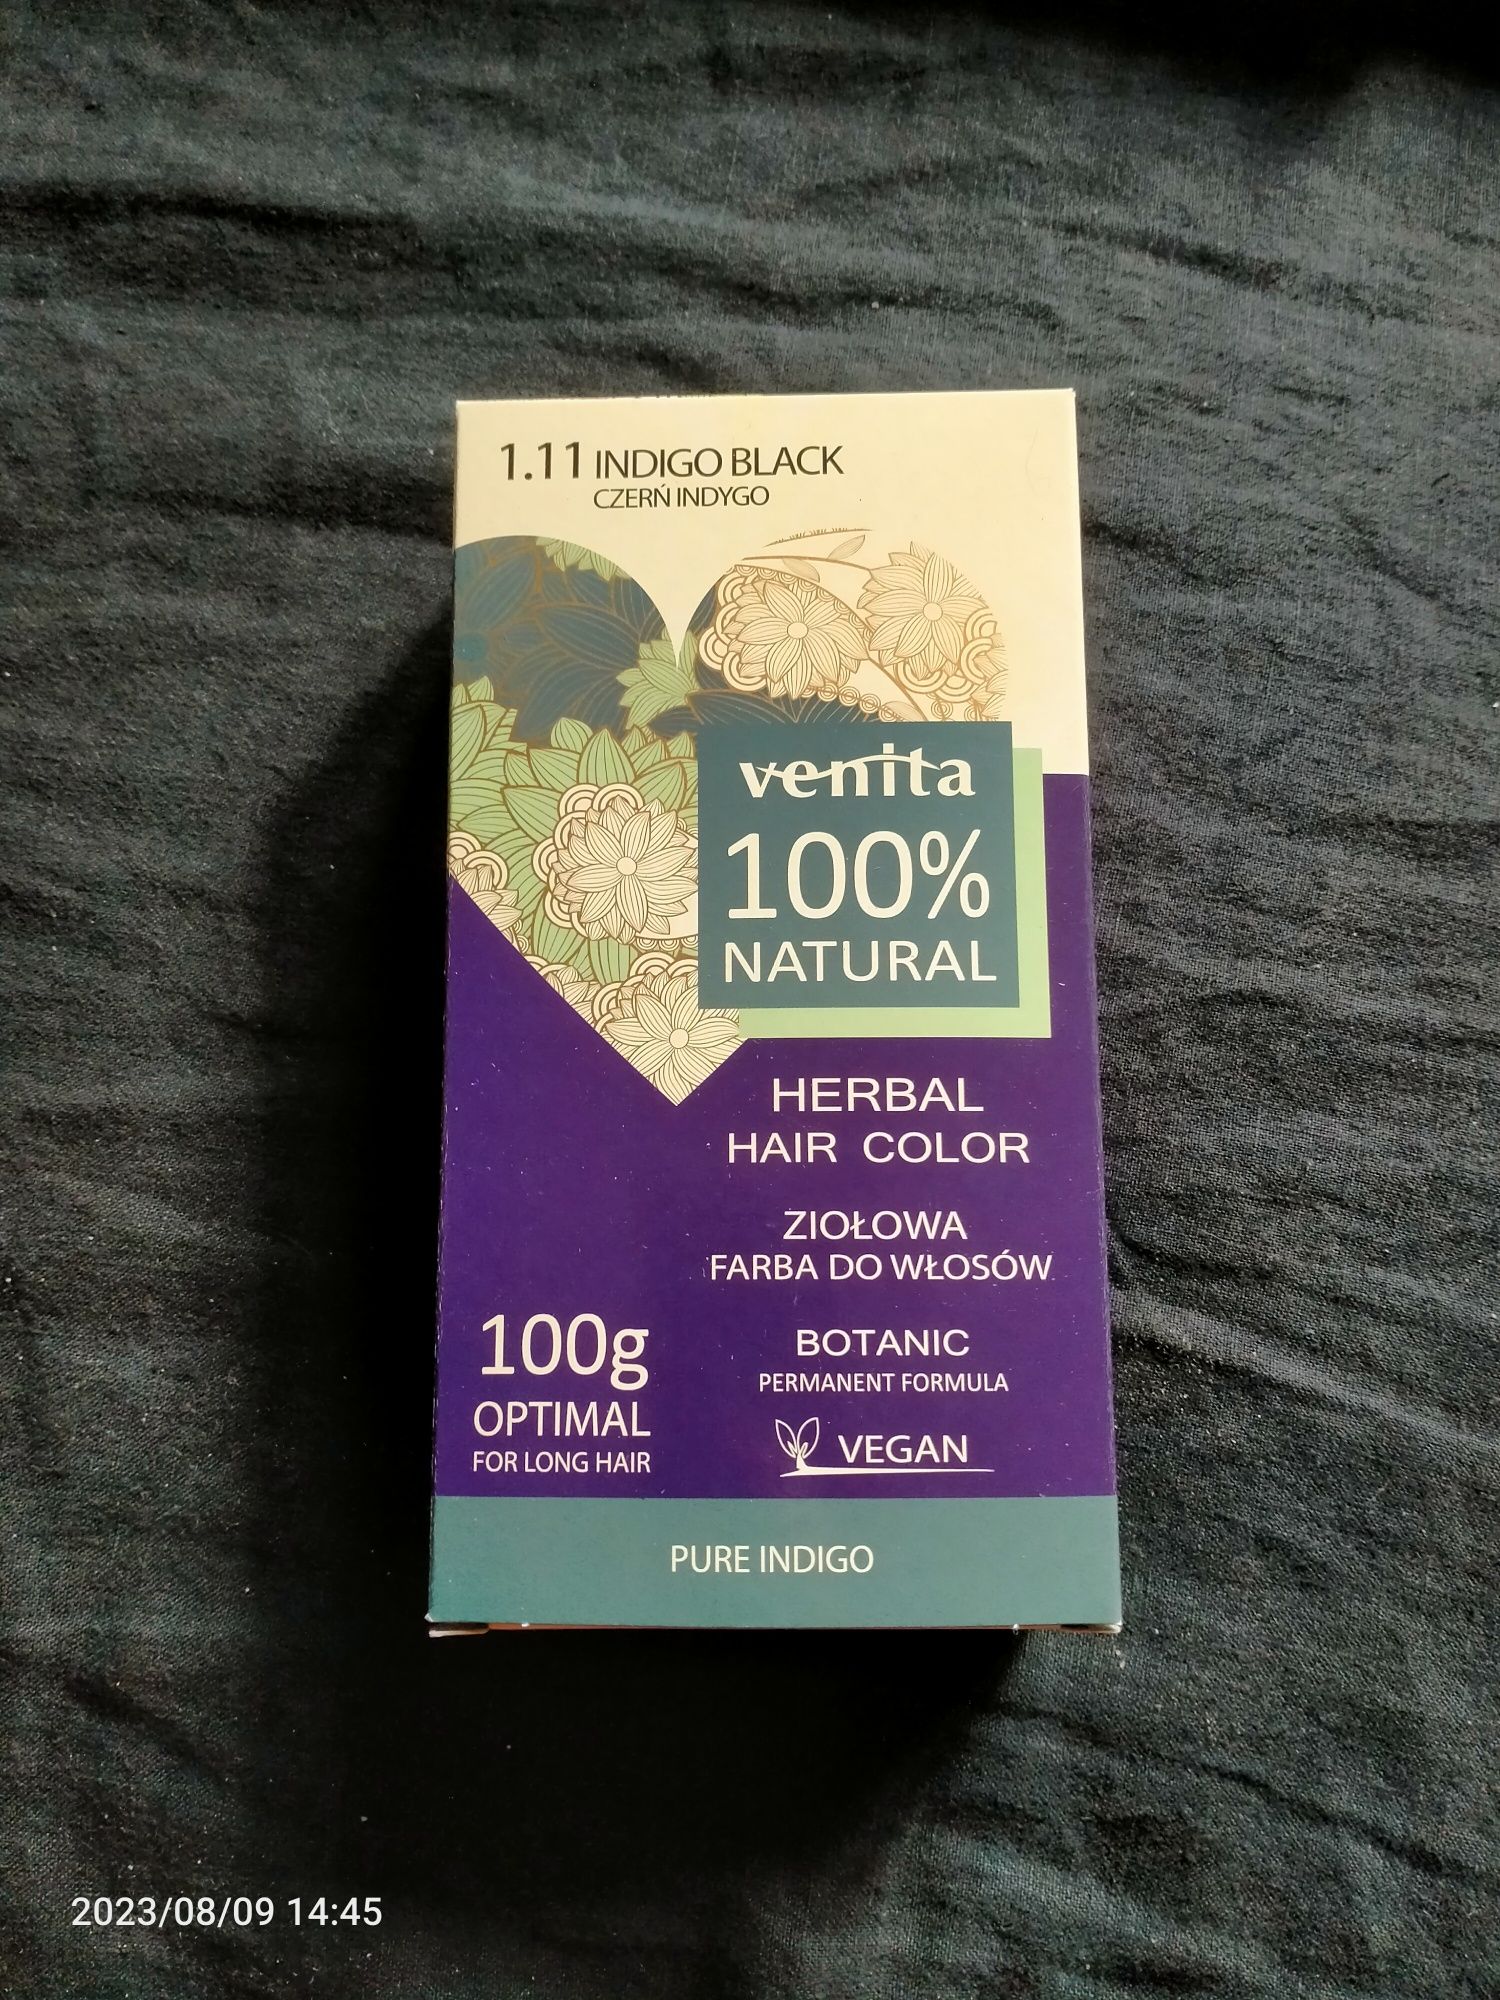 Ventia 100% Natural (Henna) 'Czerń Indigo'